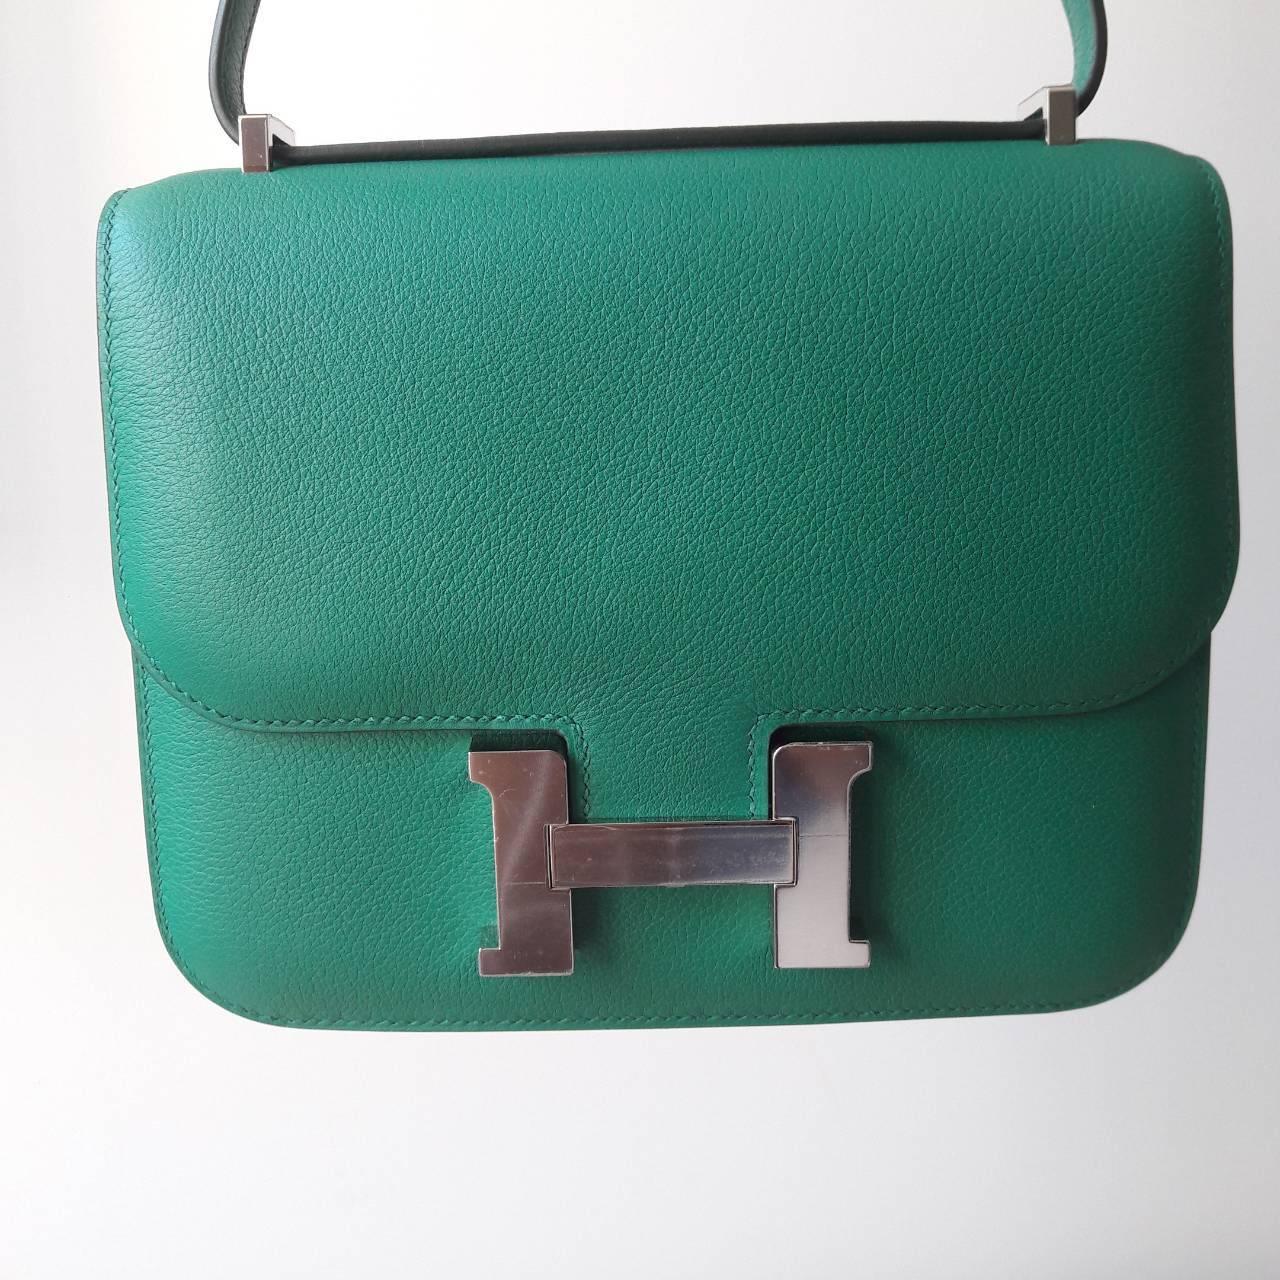 New never worn Hermes Bag
Constance
Mini
Leather Evercolor
Color Vert Vertigo
Palladium hardware

Comes full set: 
Original box
Invoice 2018
Raincoat
Padlock & Keys
Dustbag
C stamp